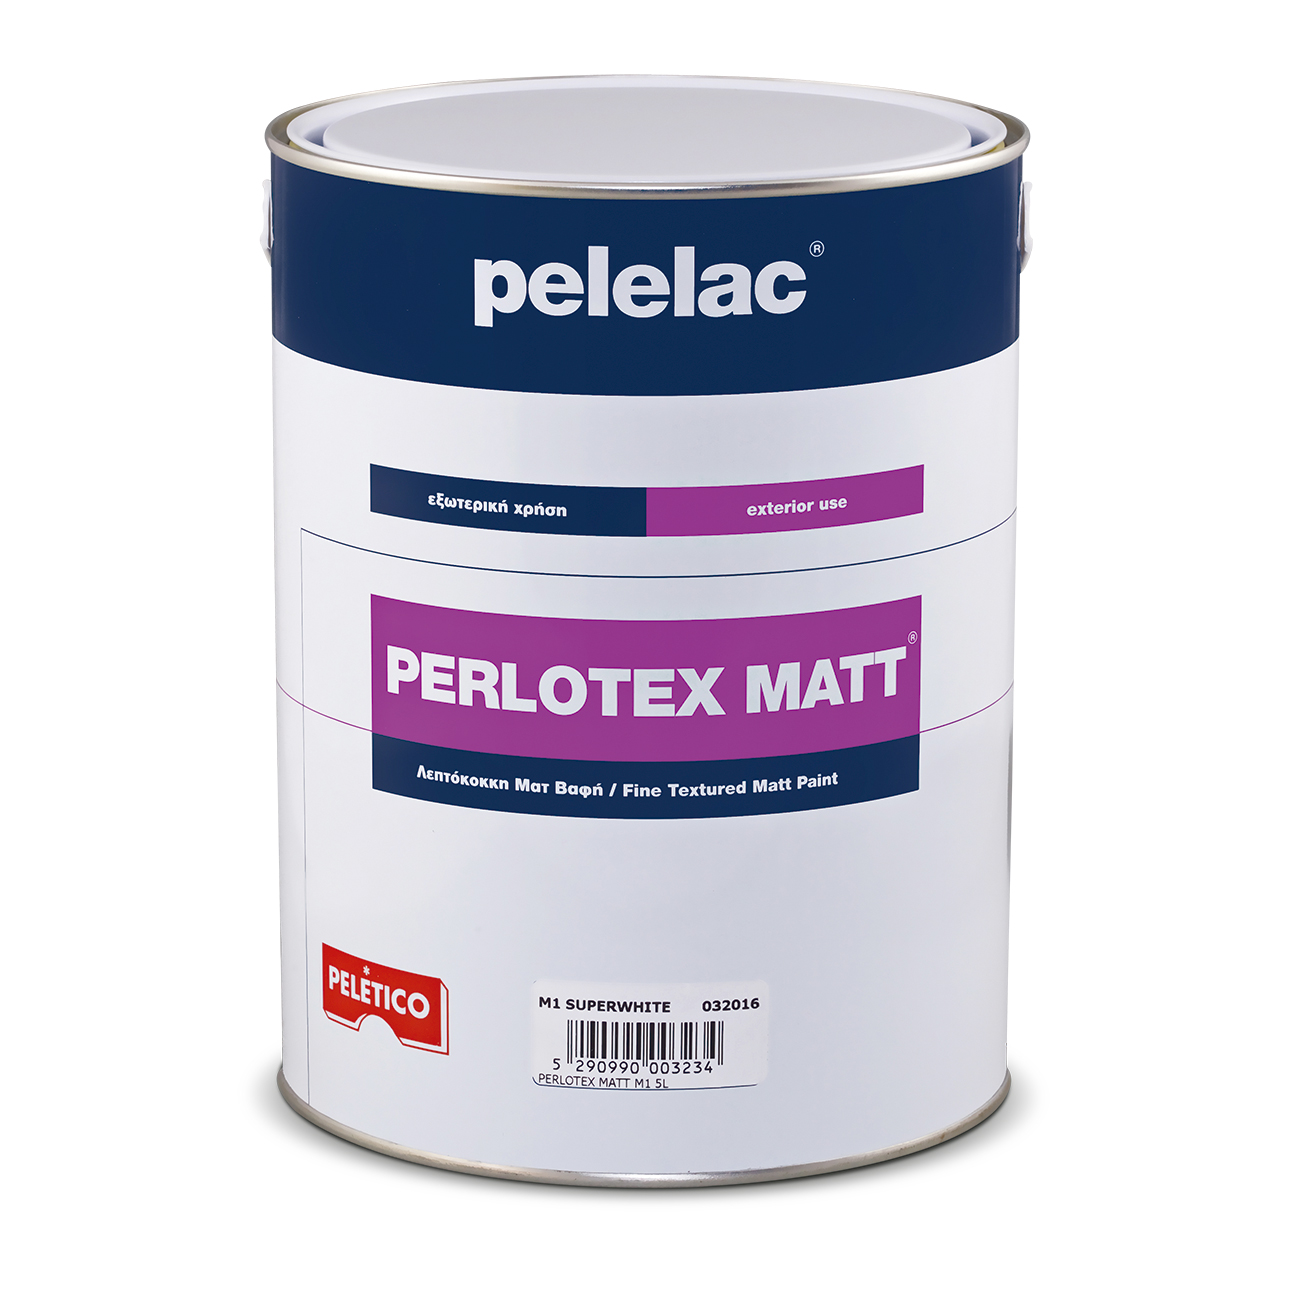 PELELAC PERLOTEX MATT® SUPERWHITE M1 15L